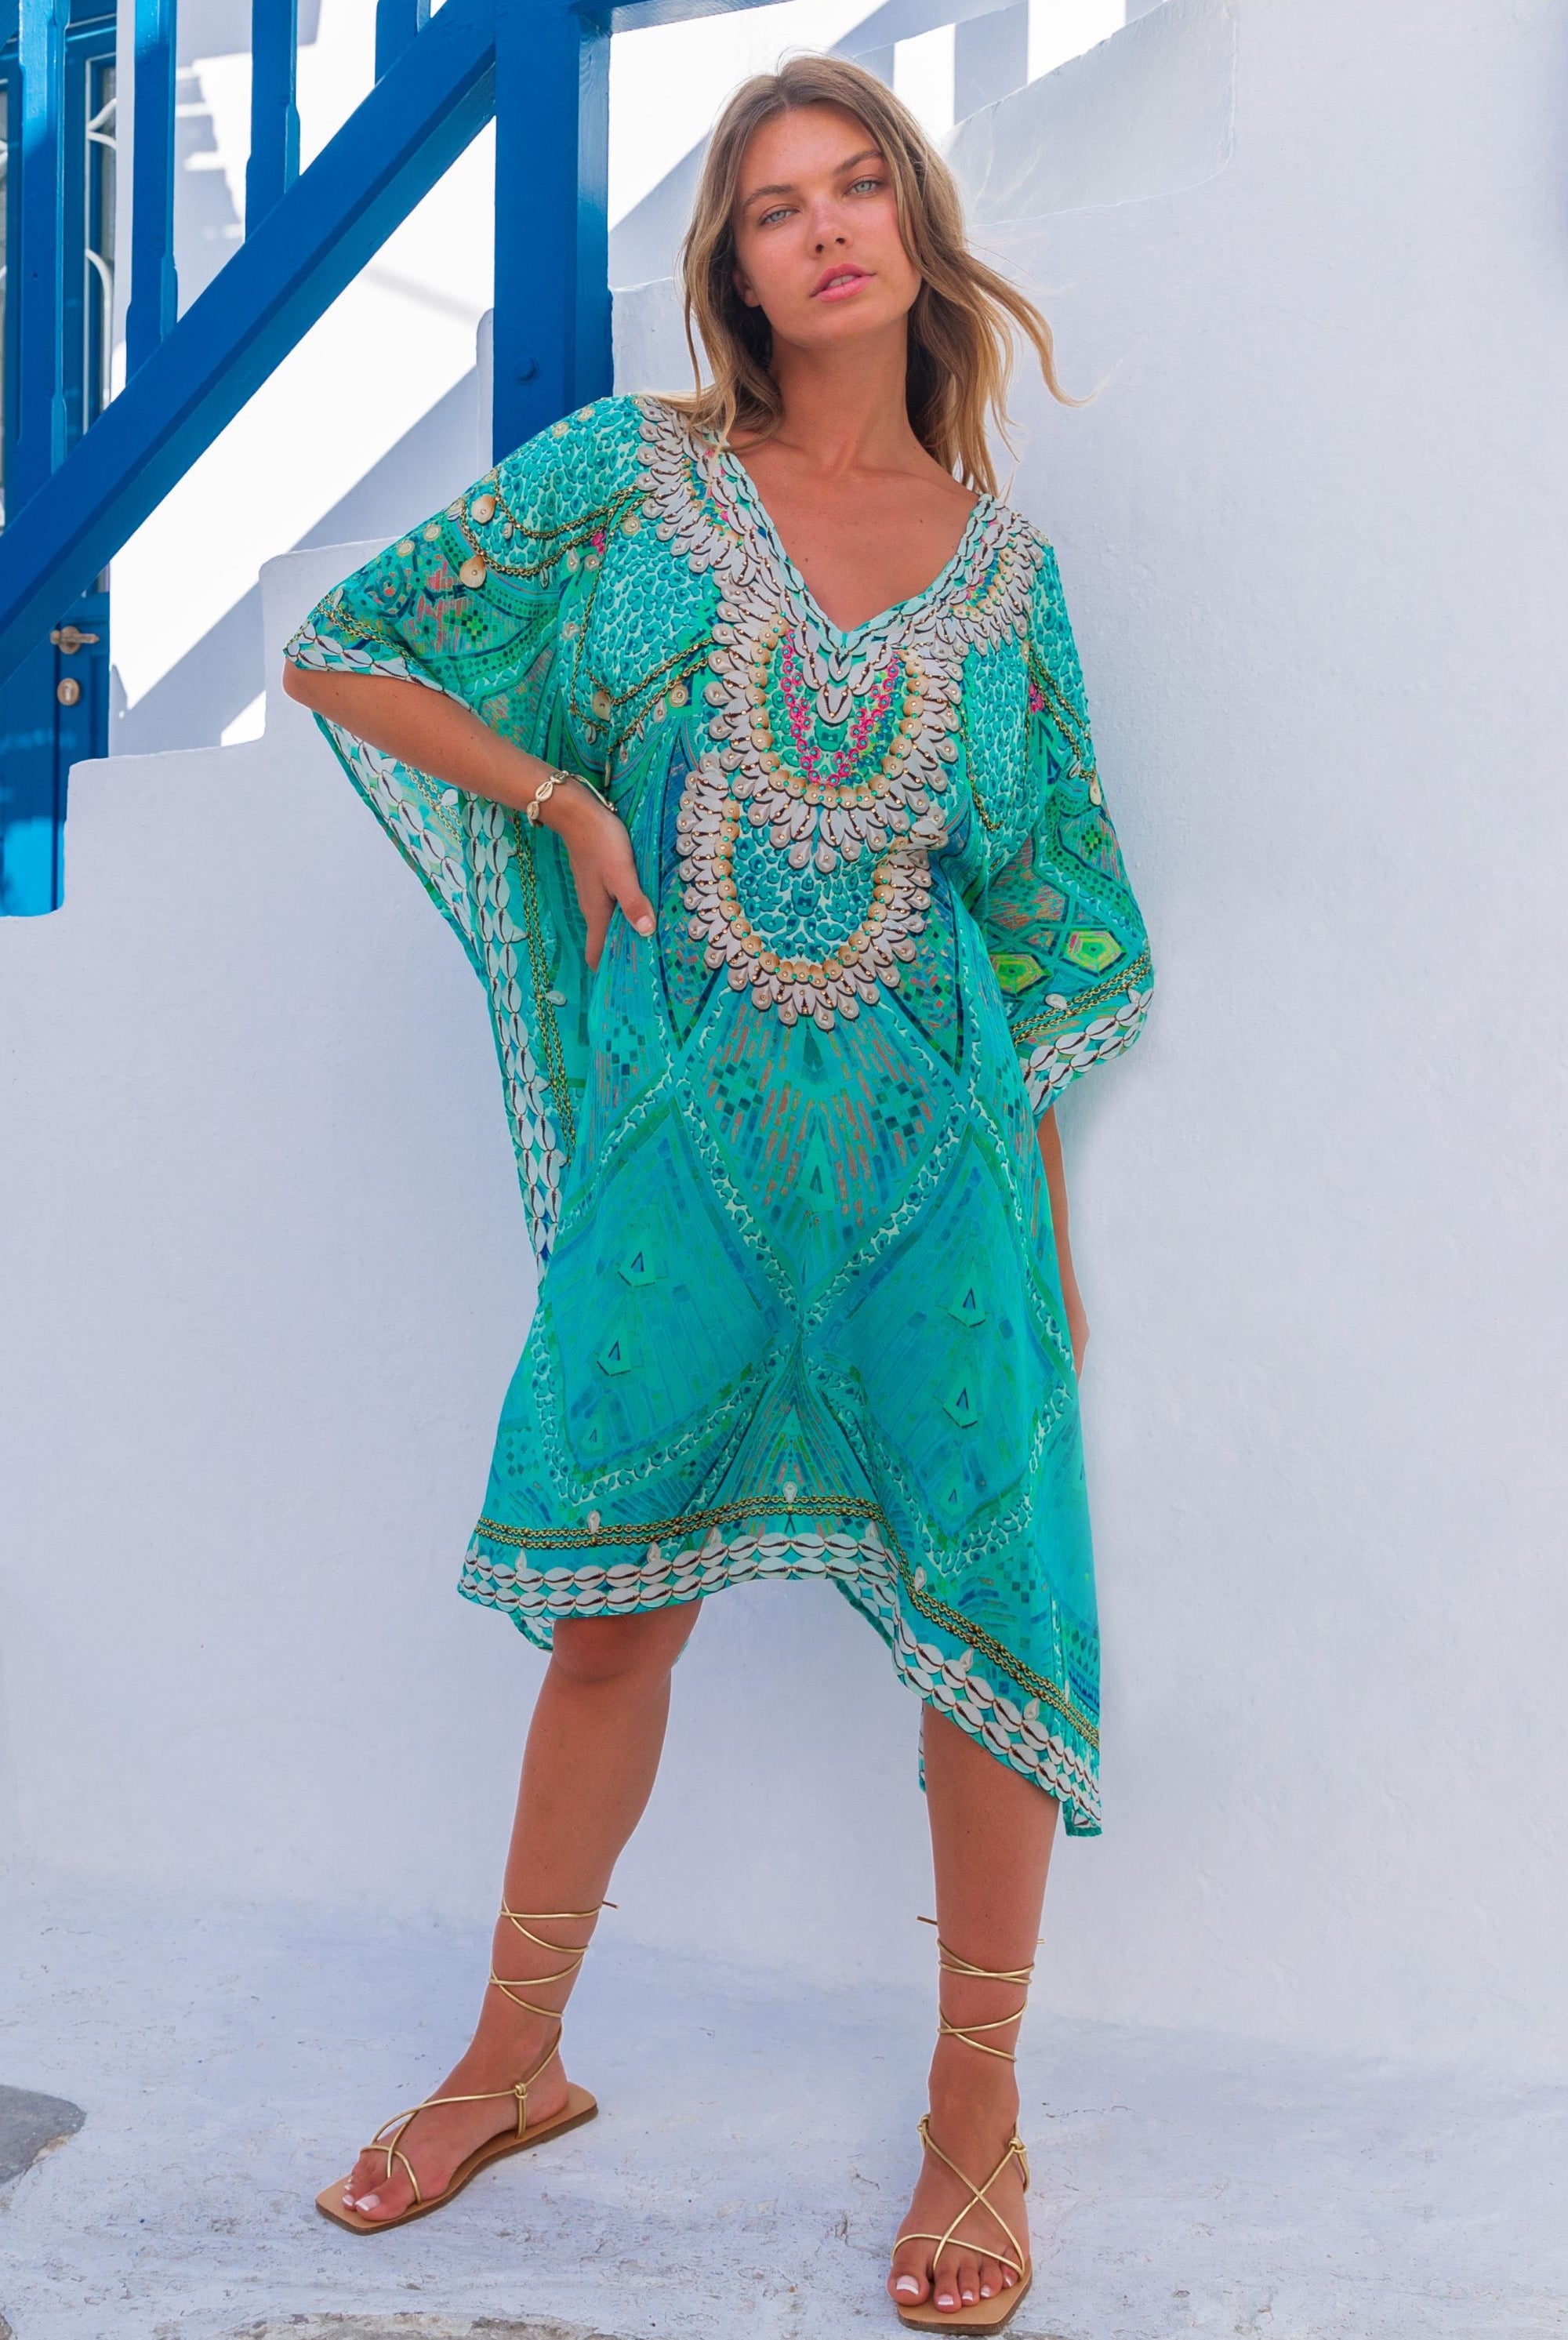 Aqua silk floaty designer kaftans to wear on holiday by Lindsey Brown resort wear 